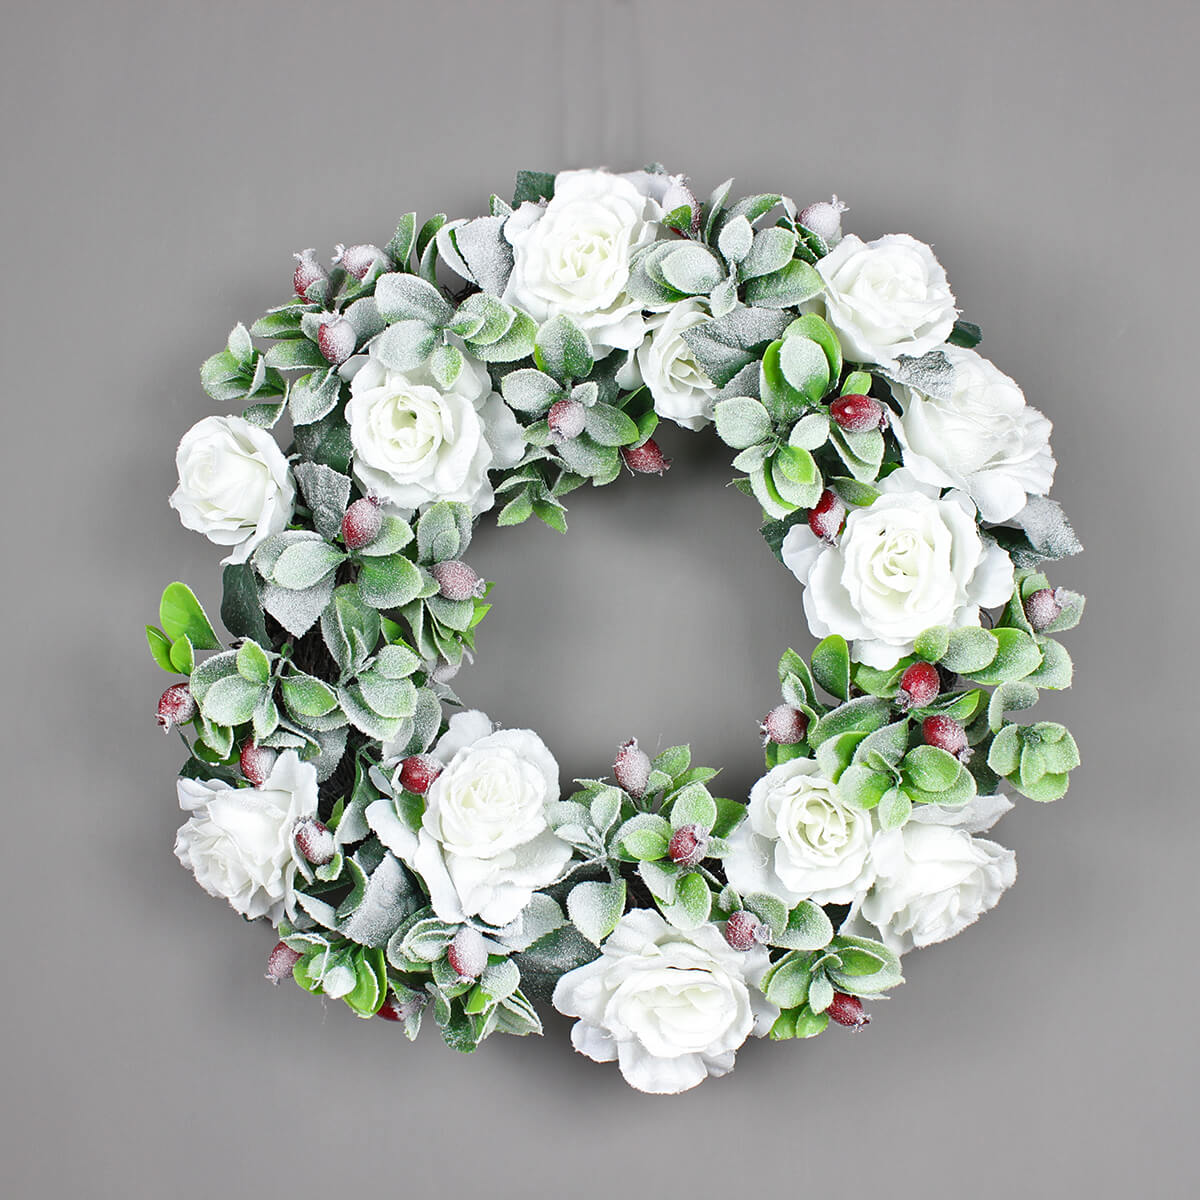 Snowy White Rose Wreath